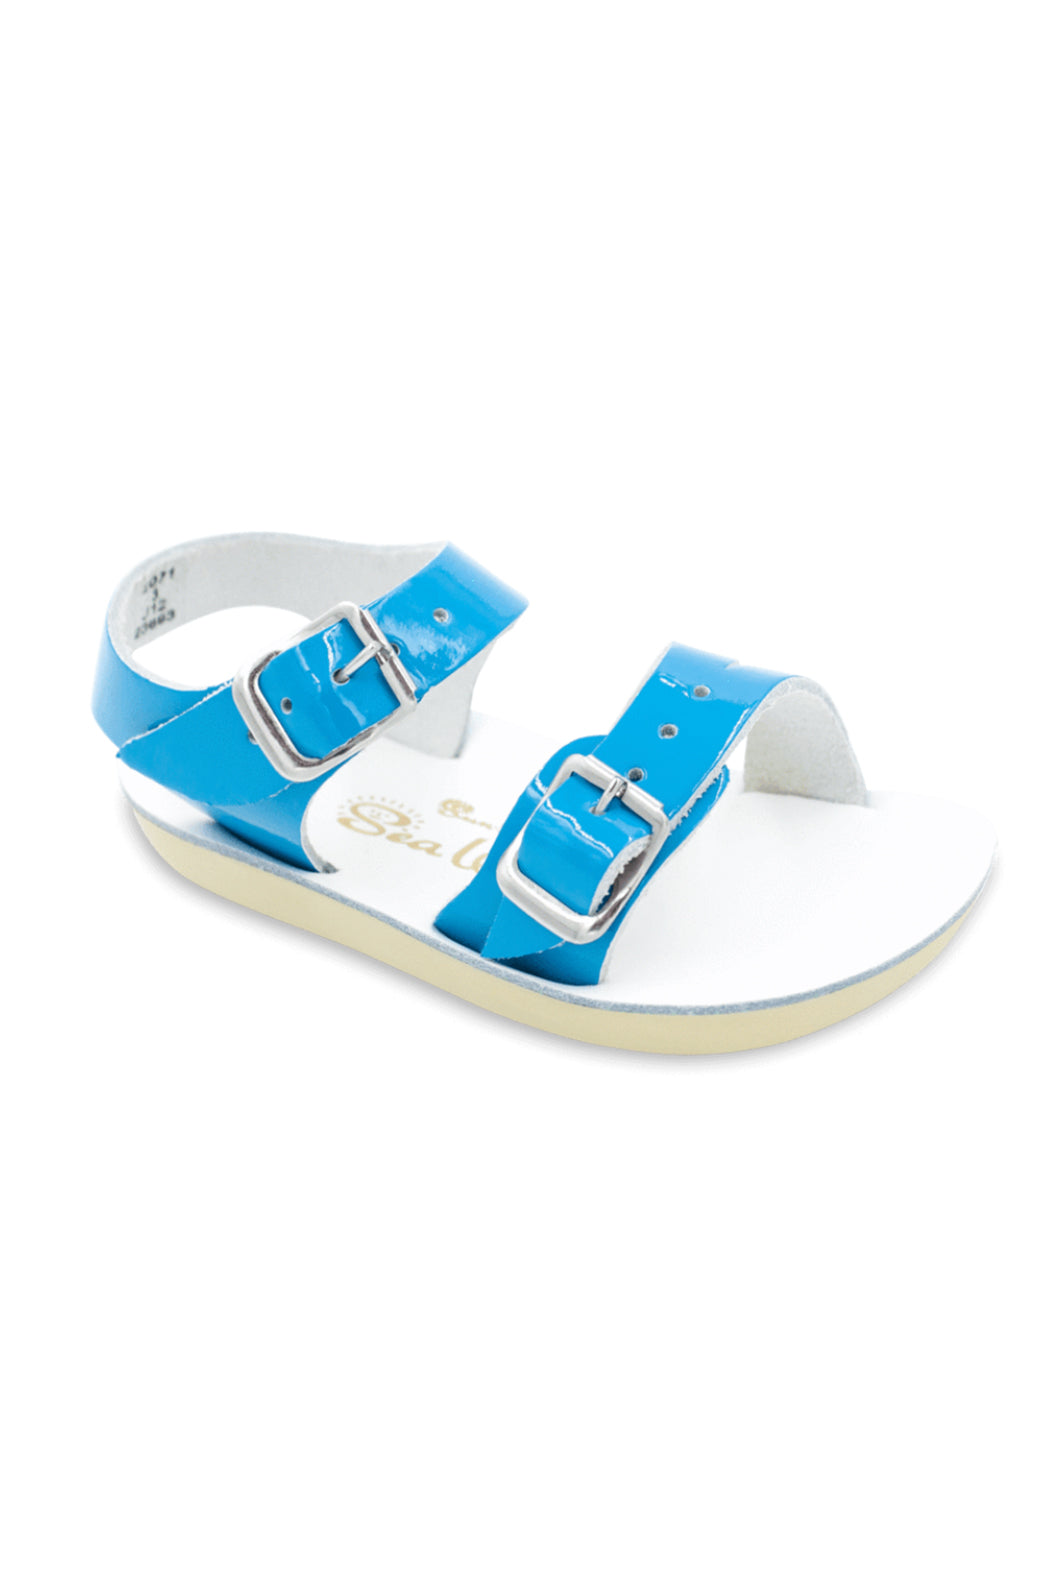 Hoy Shoes Sun-San Sea Wee Salt Water Sandal